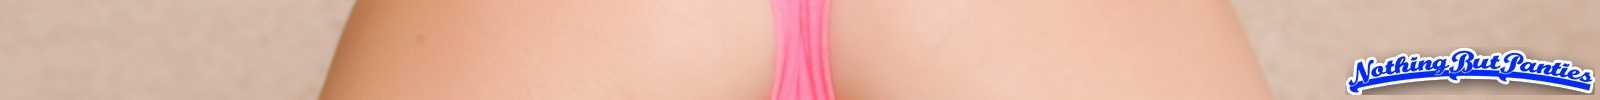 Kayden pink cotton briefs topless outside #72635566